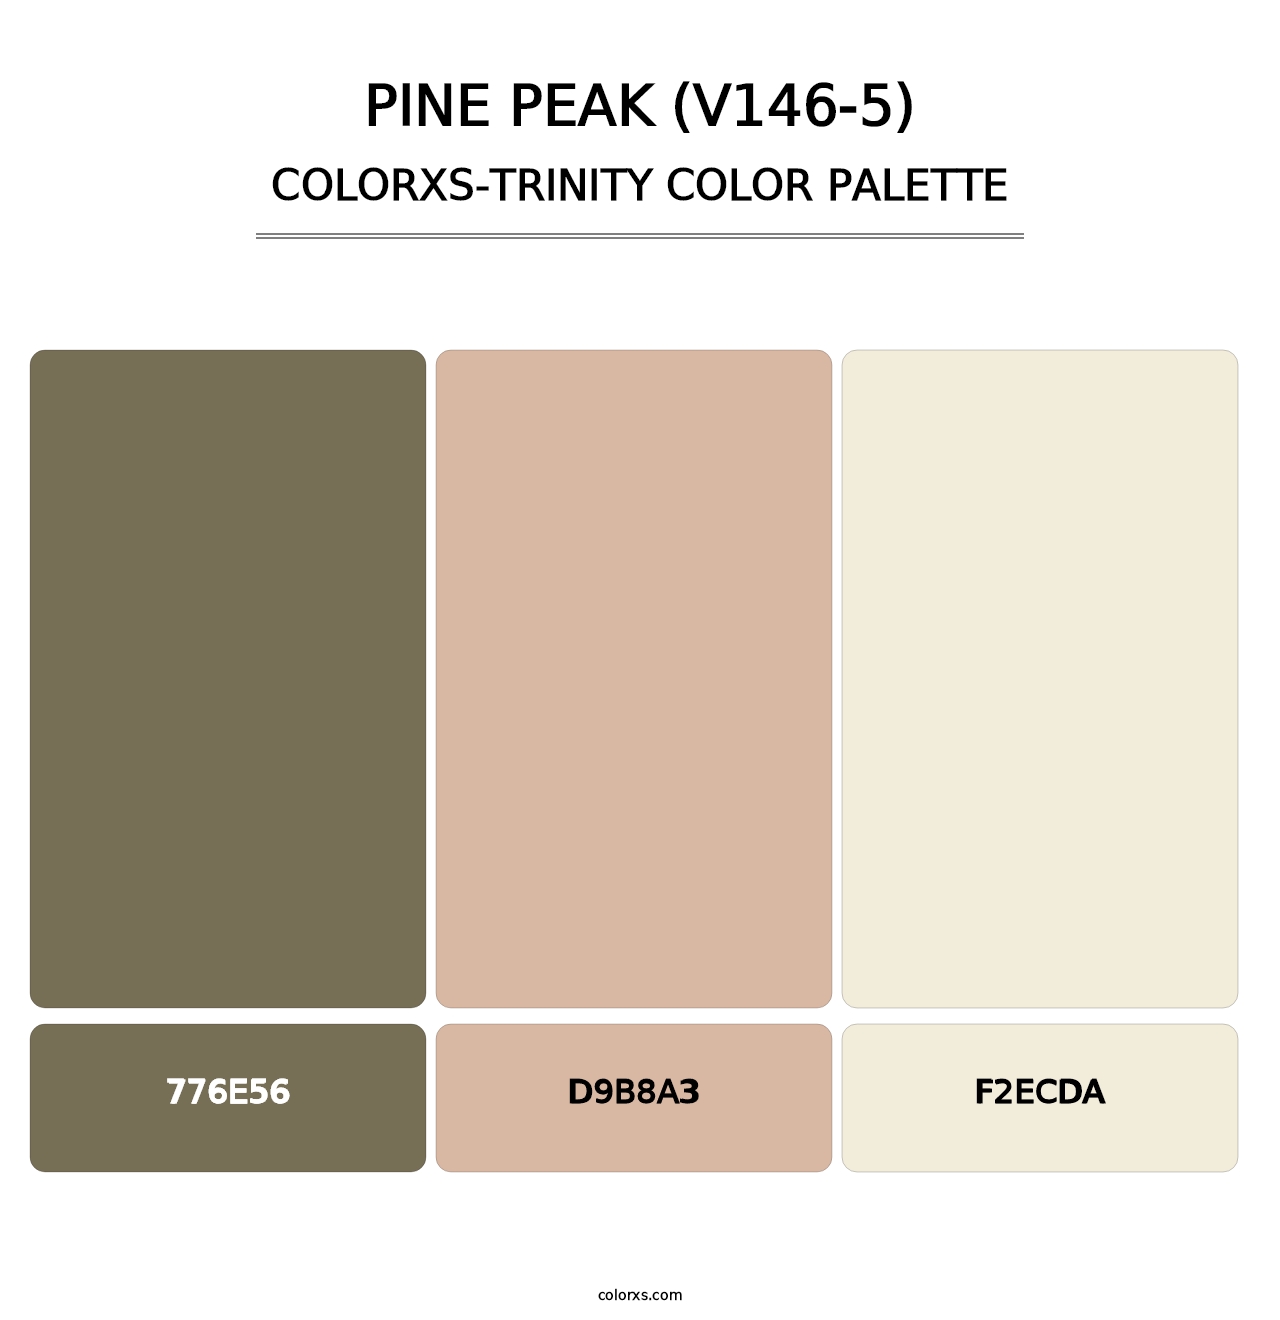 Pine Peak (V146-5) - Colorxs Trinity Palette